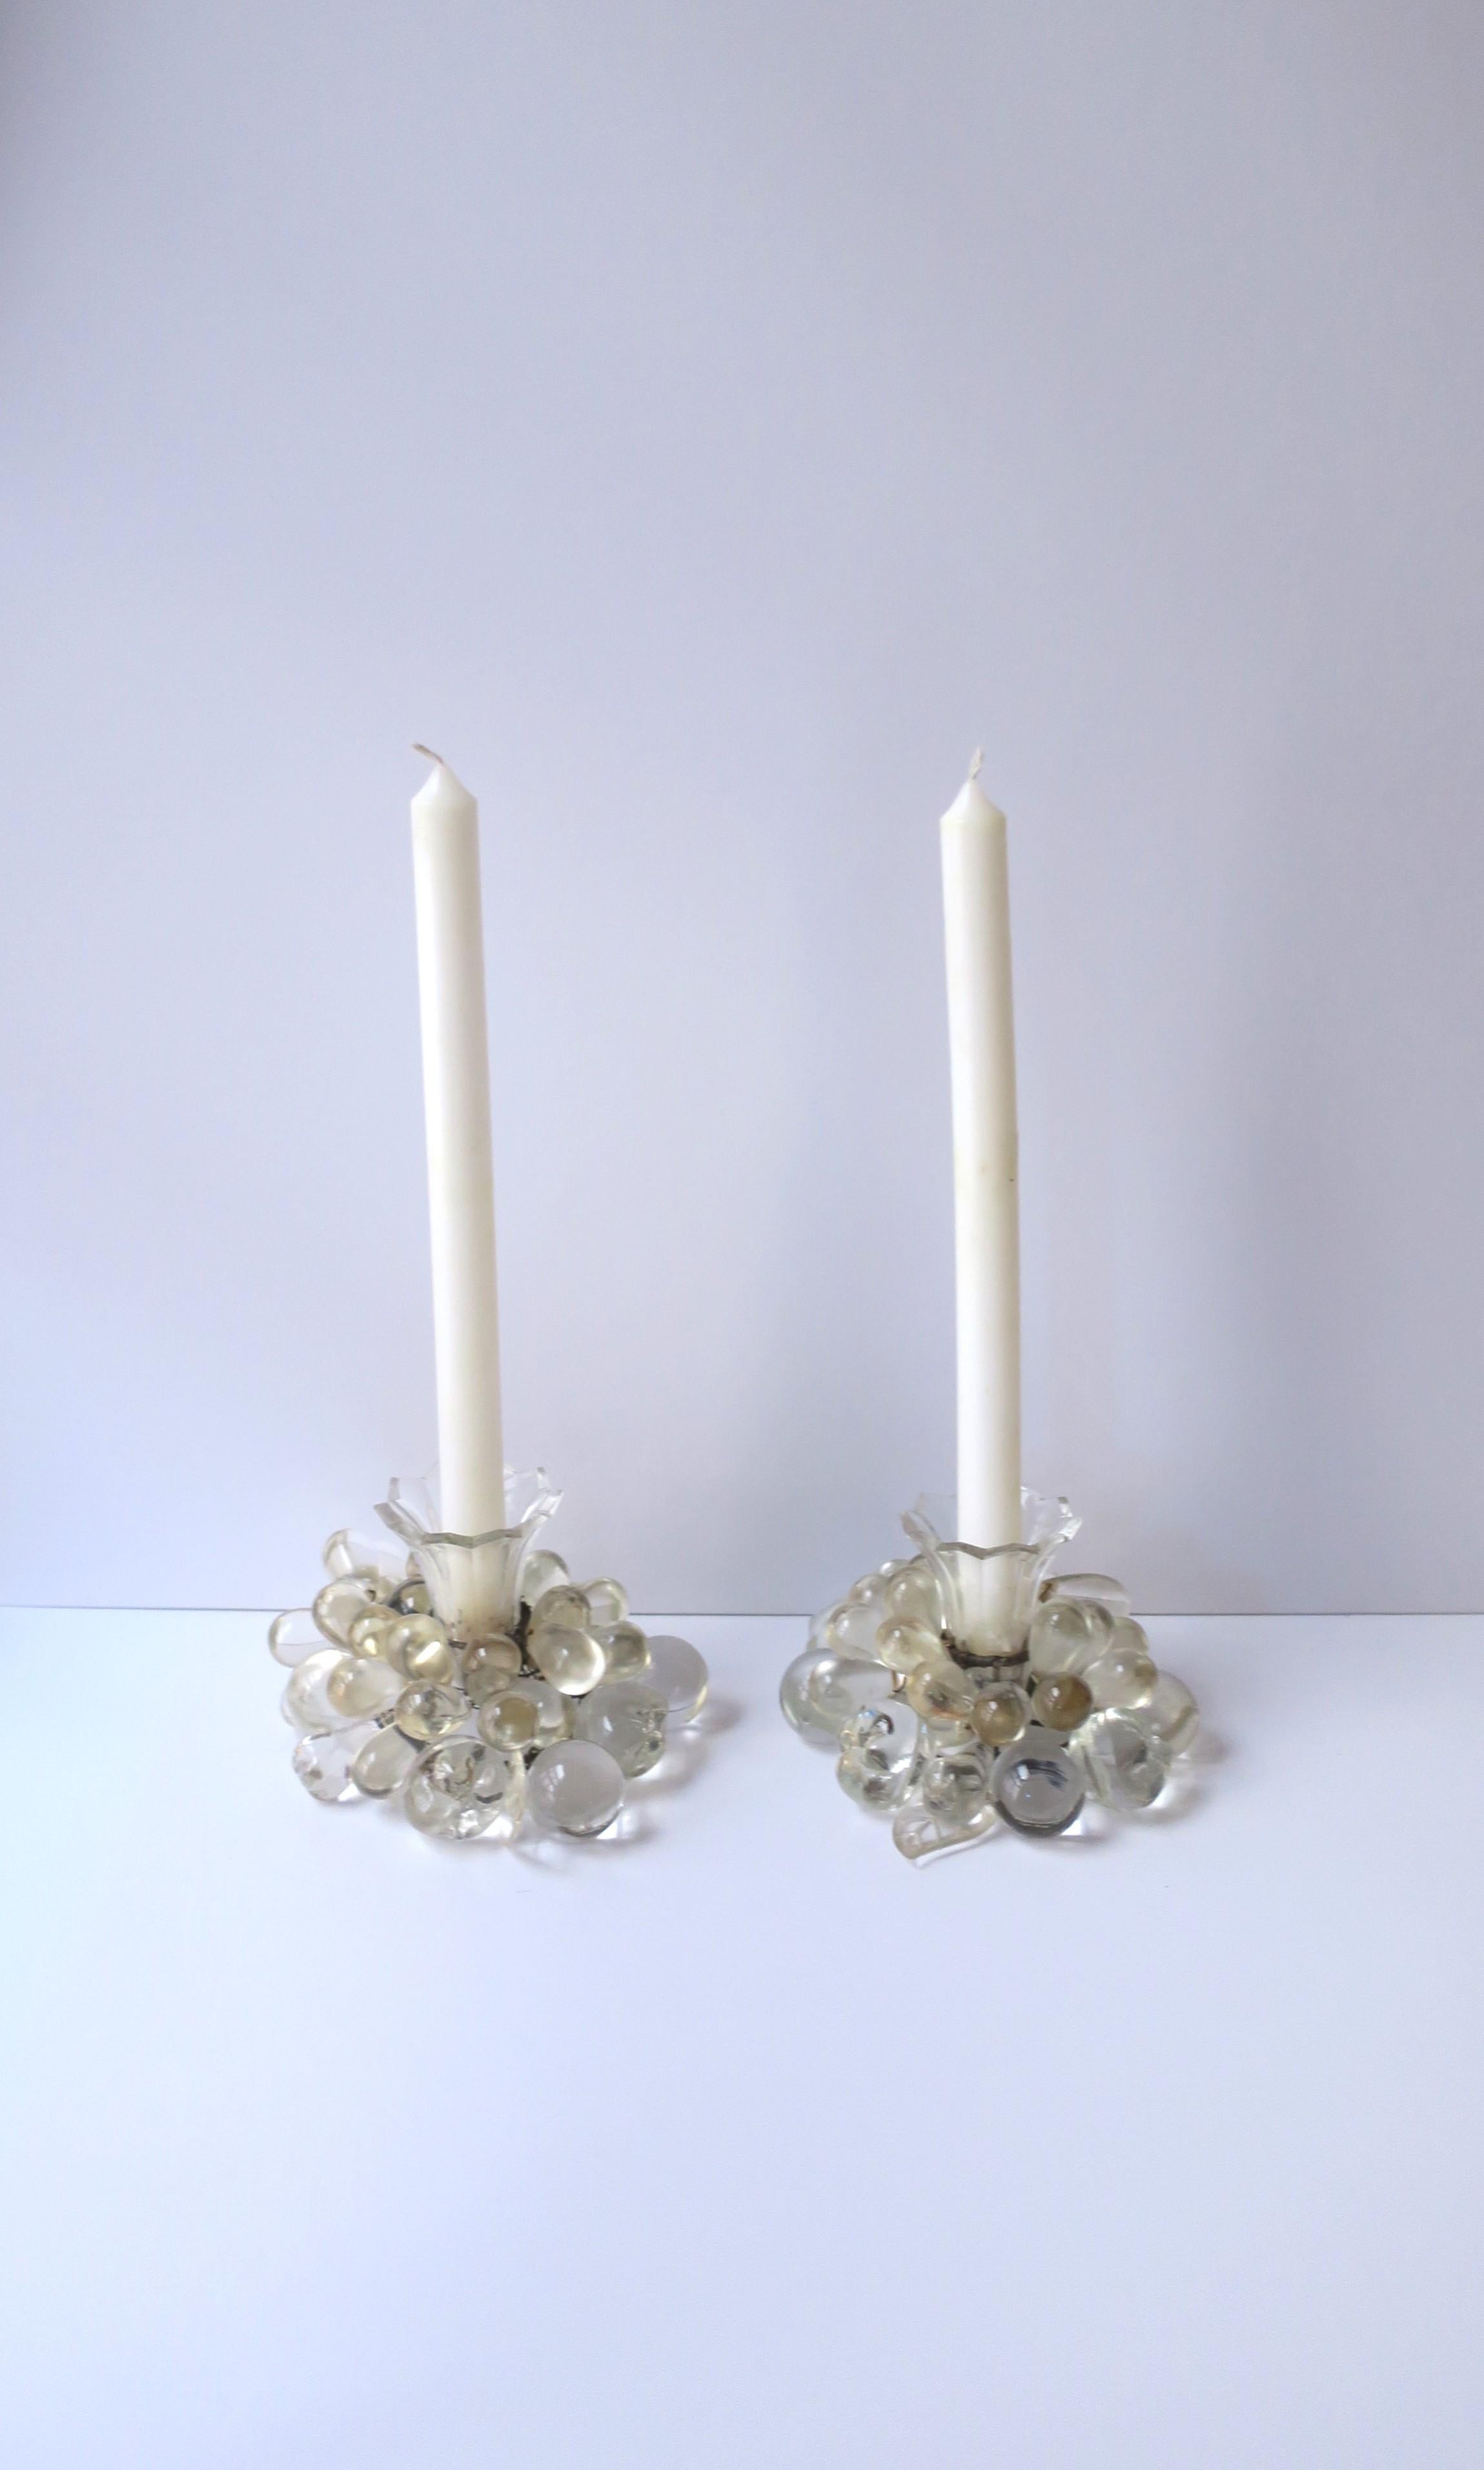 candlestick holder pair